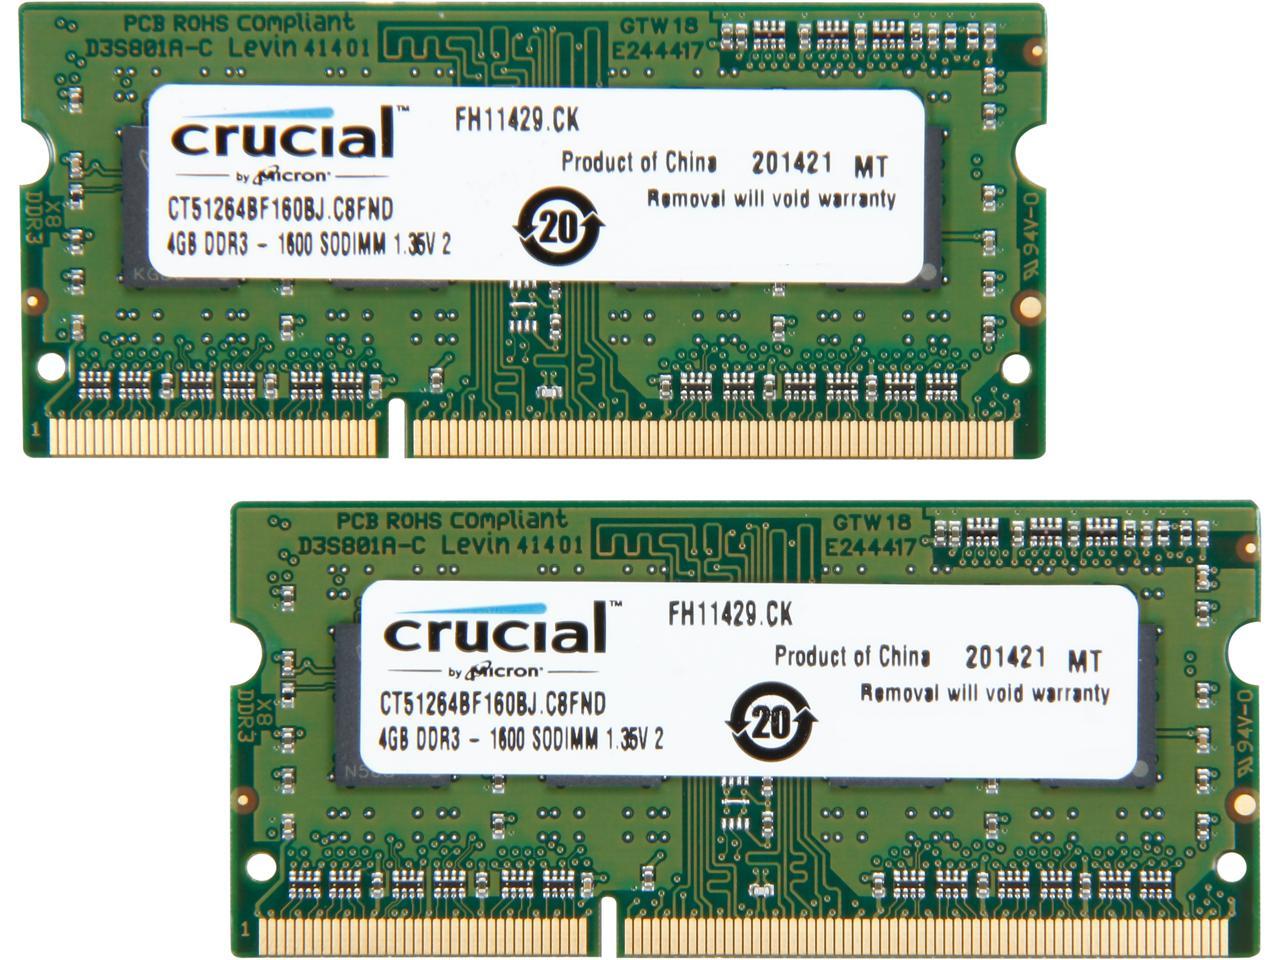 Crucial 8GB Kit (2 x 4GB) DDR3L-1600 SODIMM Memory for Mac - CT2K4G3S160BM  